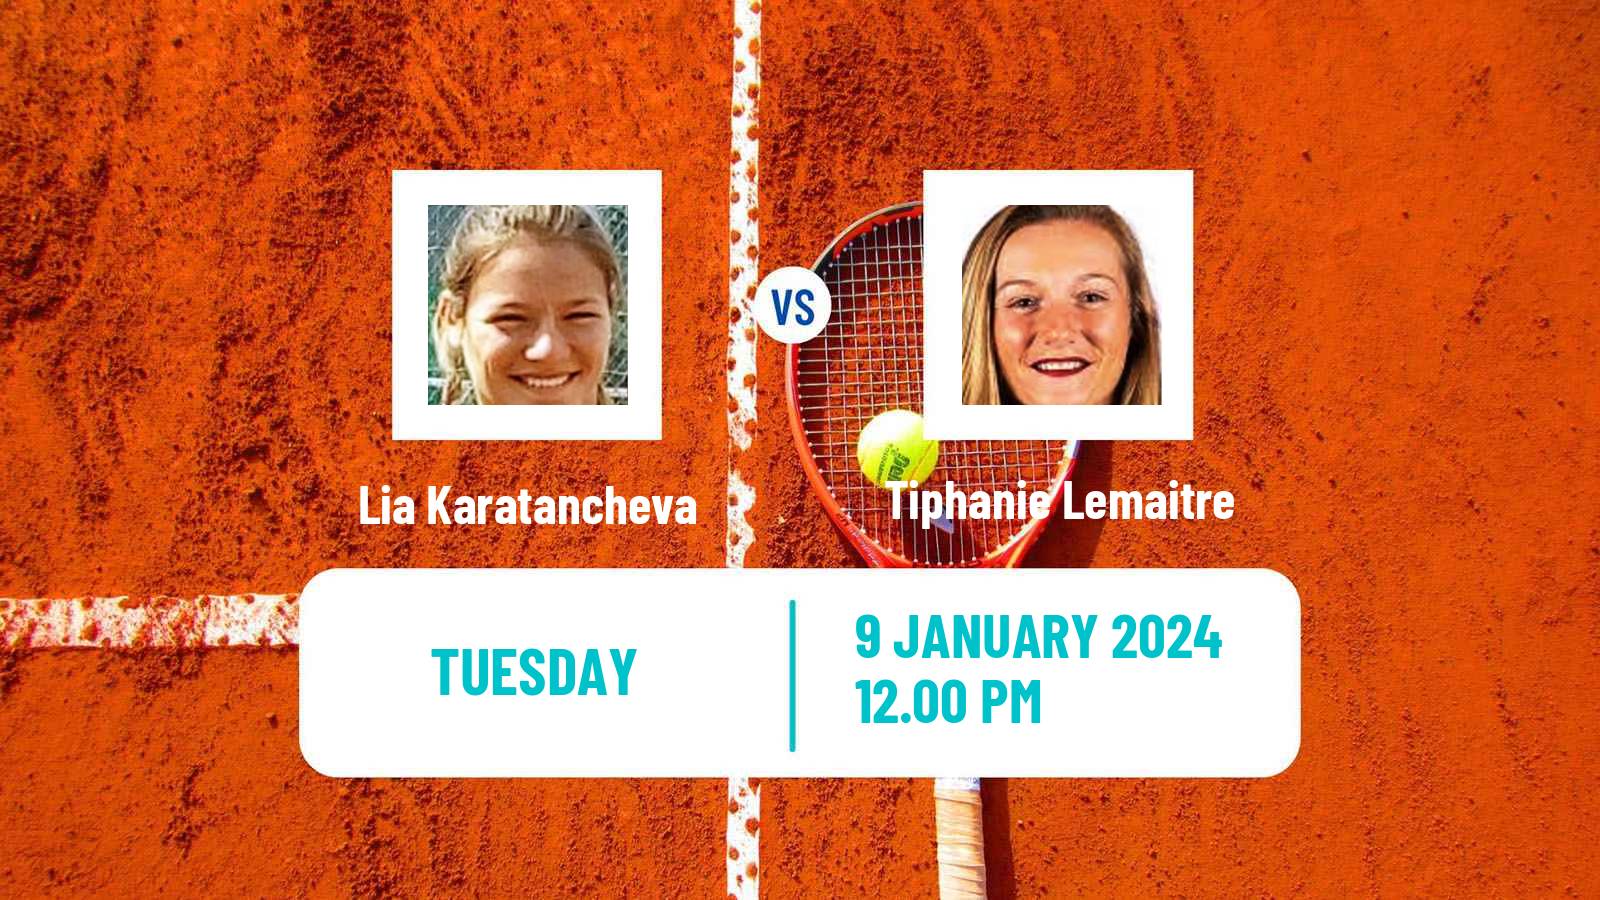 Tennis ITF W35 Naples Fl Women Lia Karatancheva - Tiphanie Lemaitre